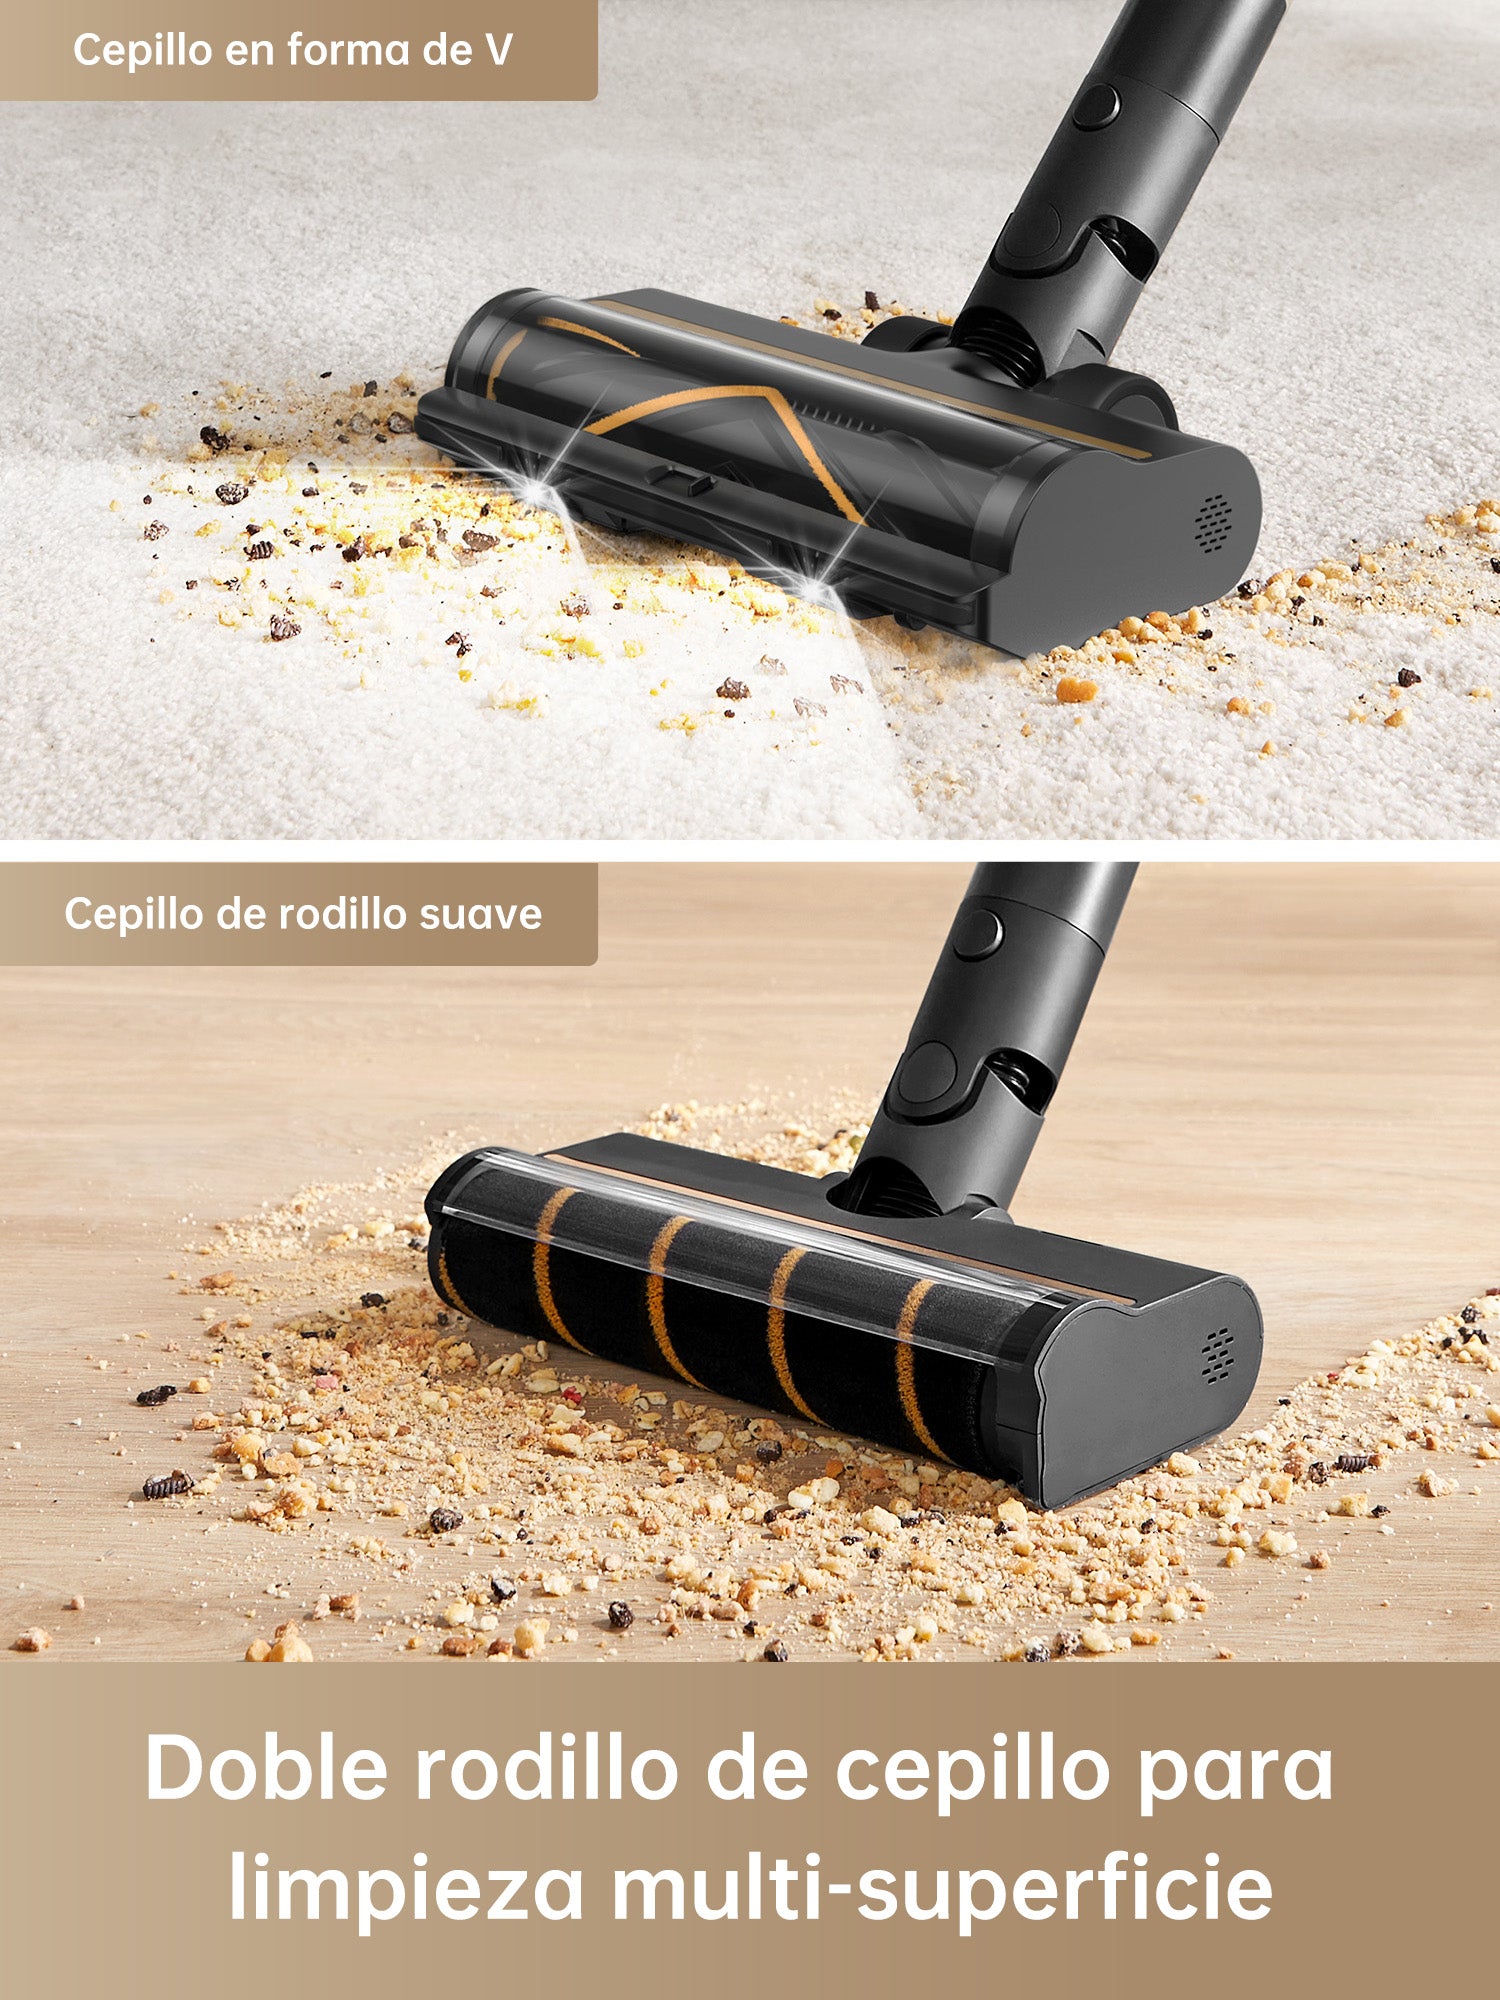 Dreame R10 Pro Stick Vacuum